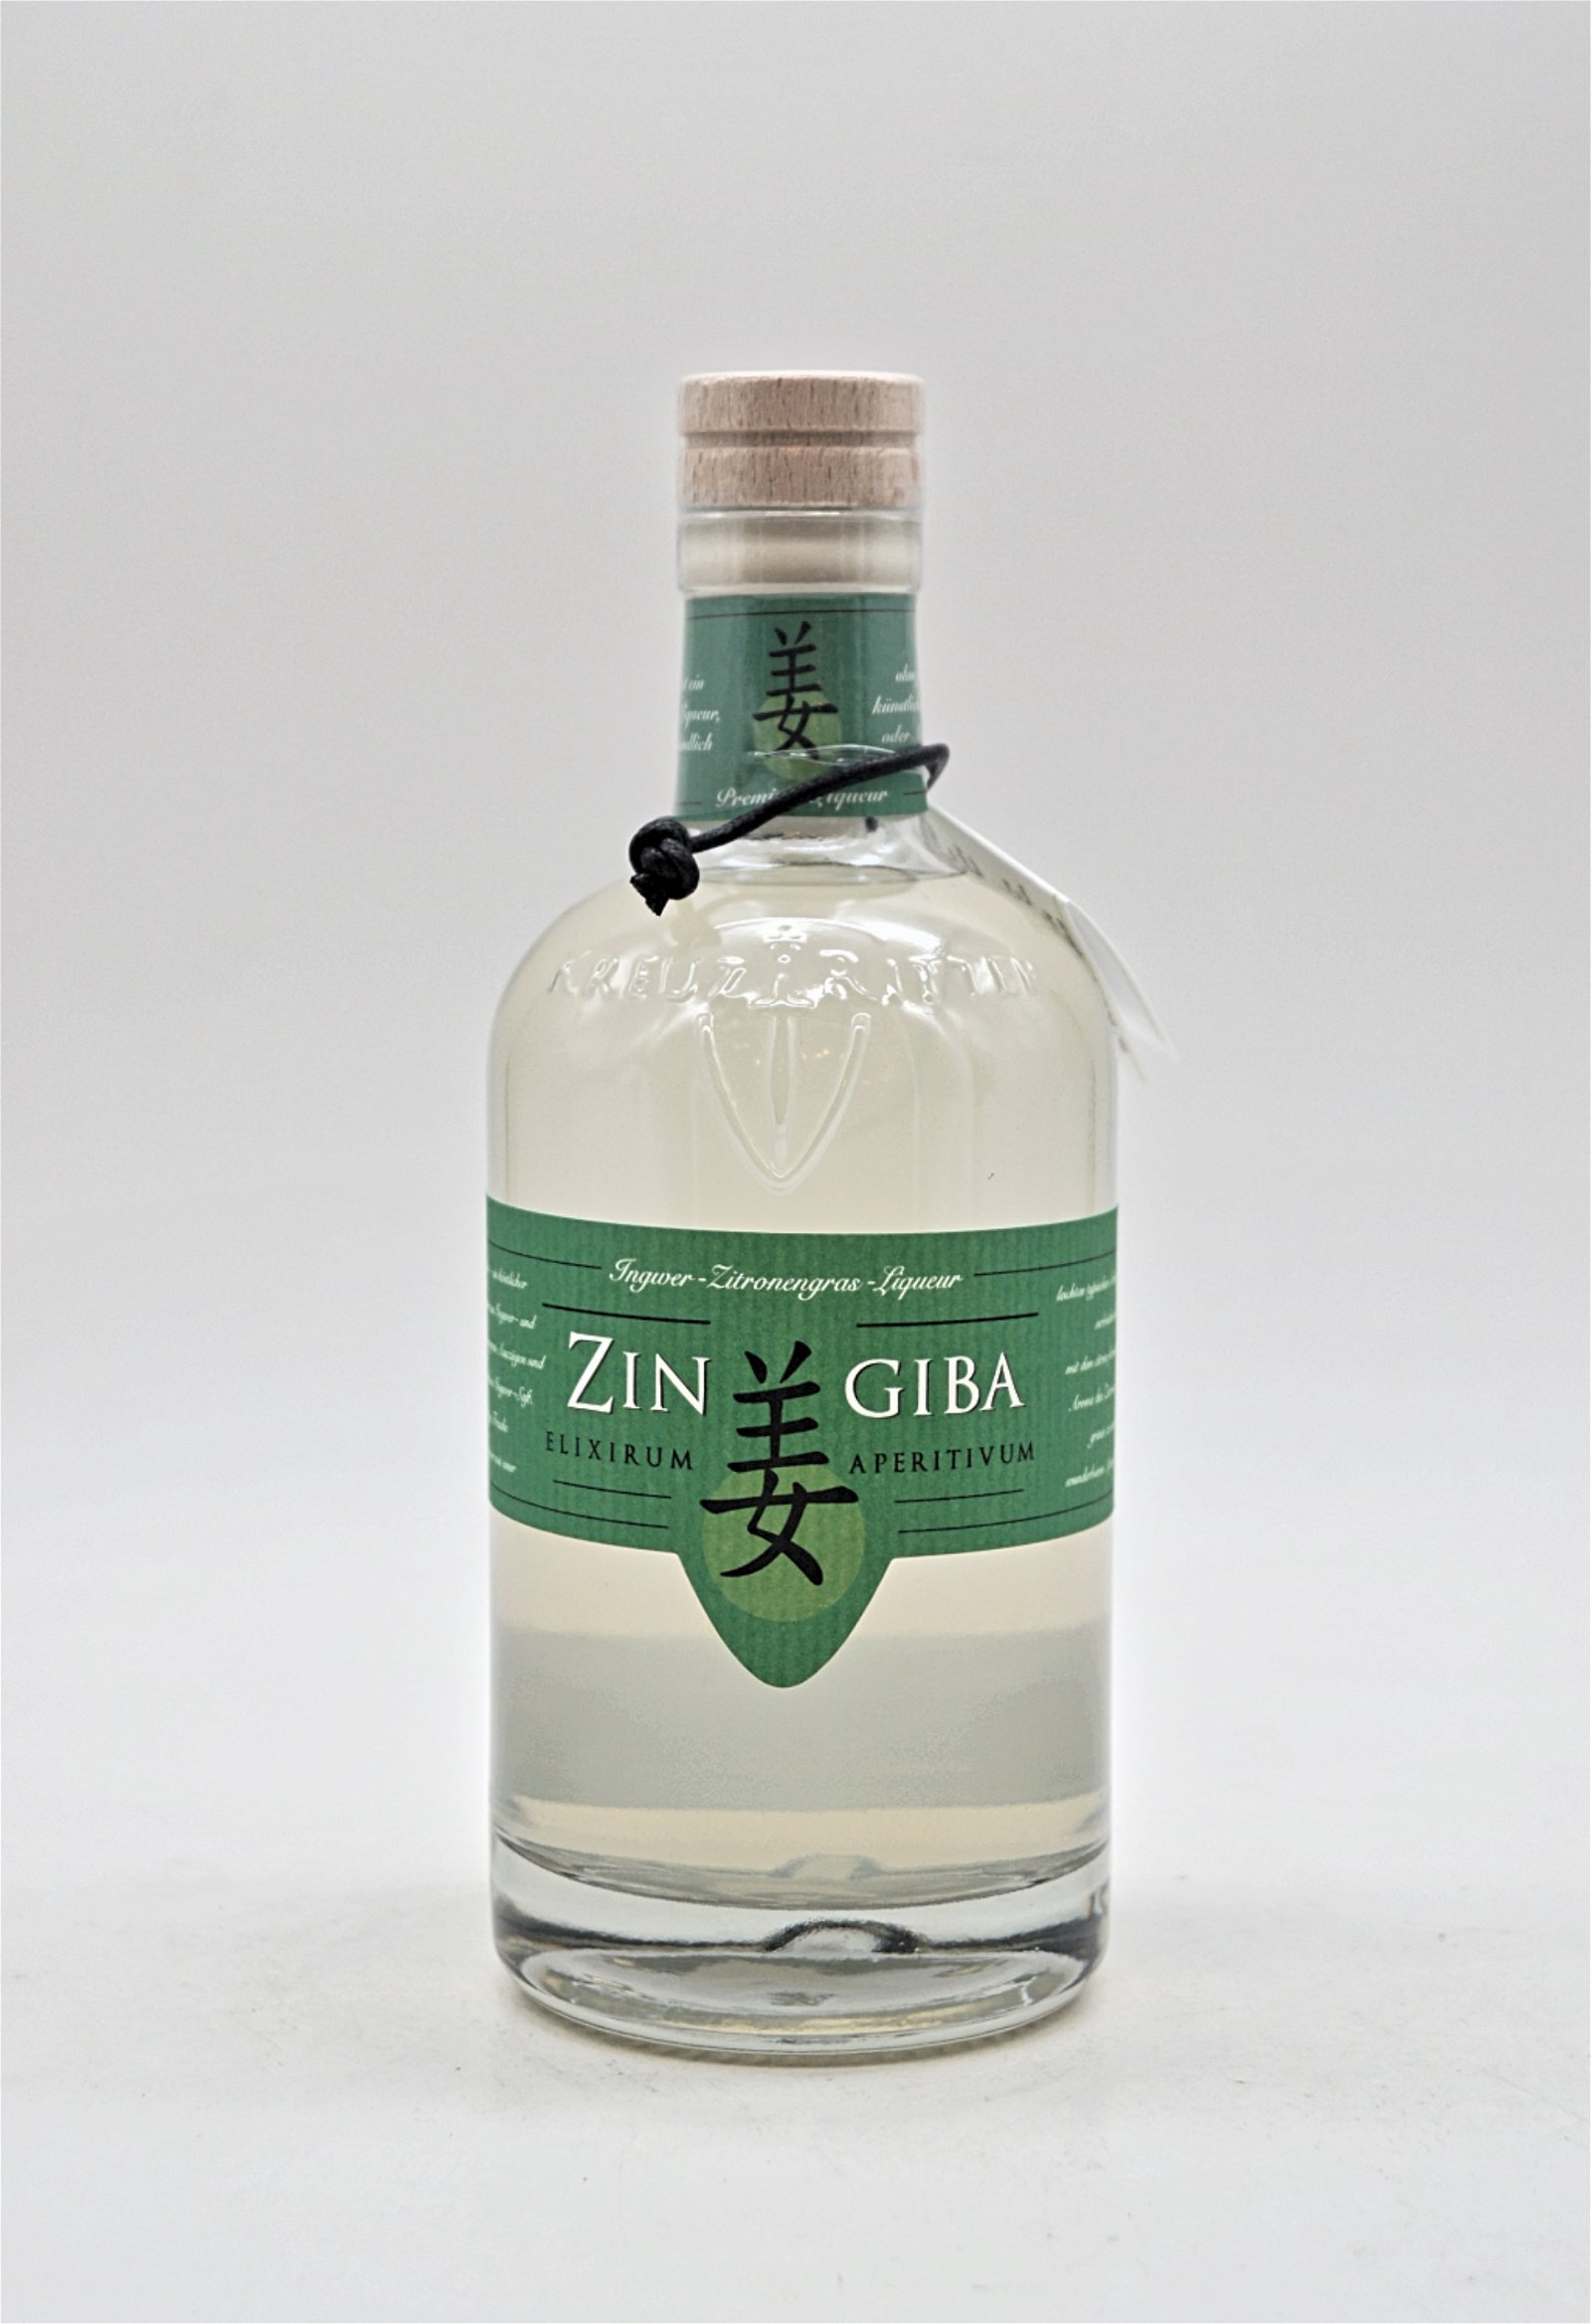 Zingiba Ingwer-Zitronengras-Likör